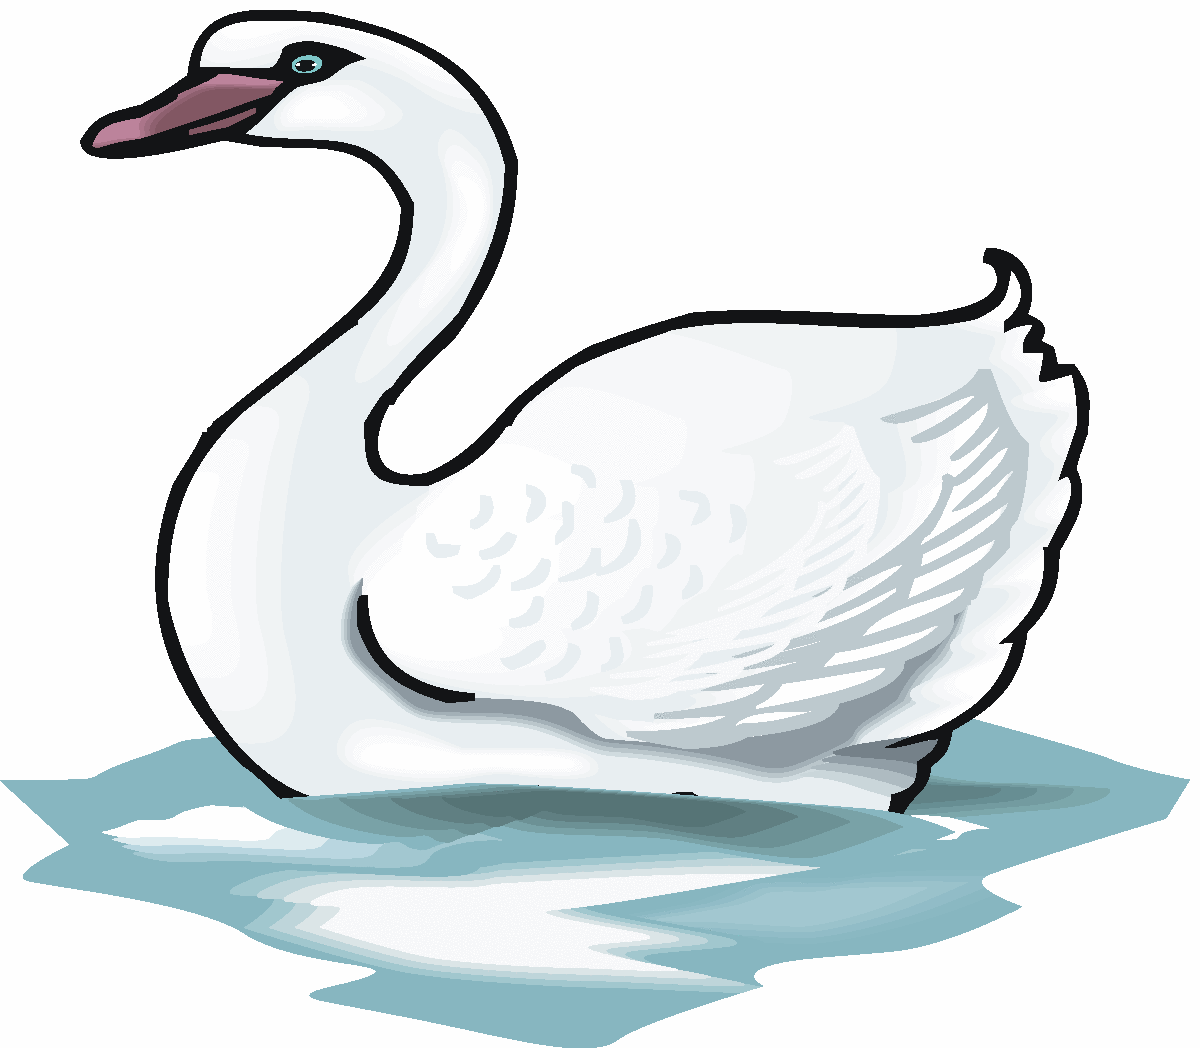 Trumpeter Swan clipart #7, Download drawings